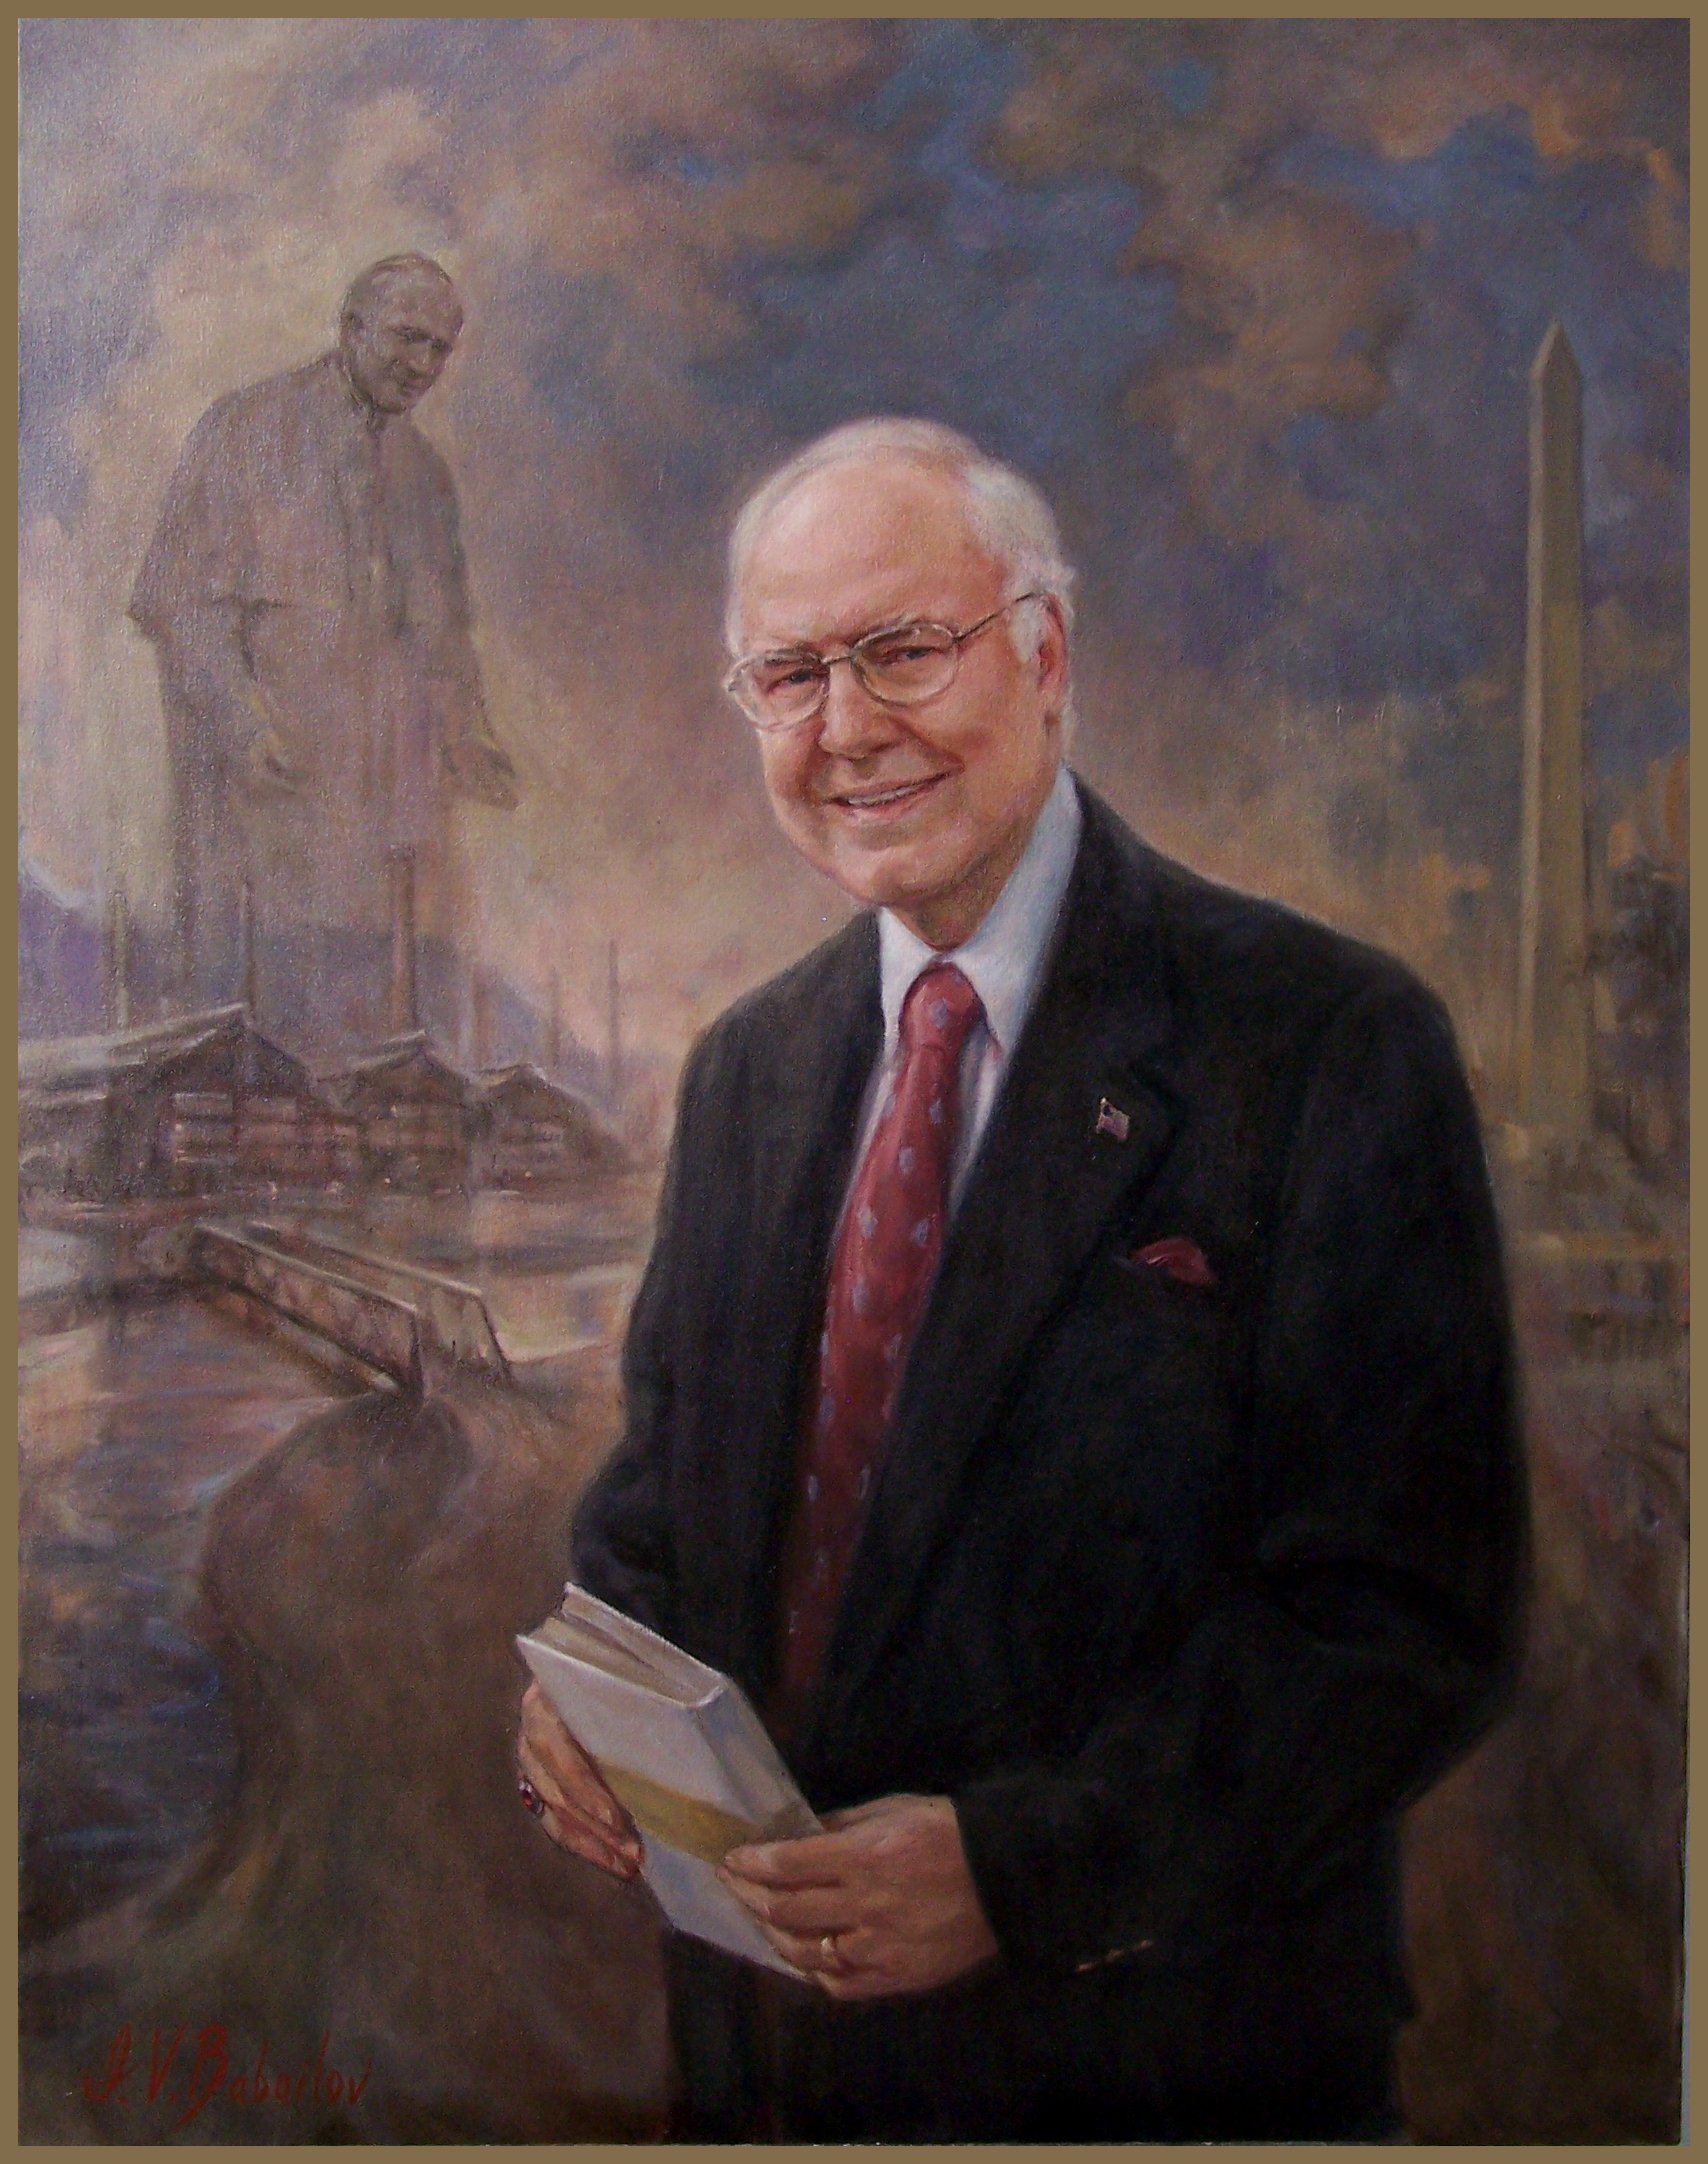 Portrait of Michael Novak by Igor V. Babailov